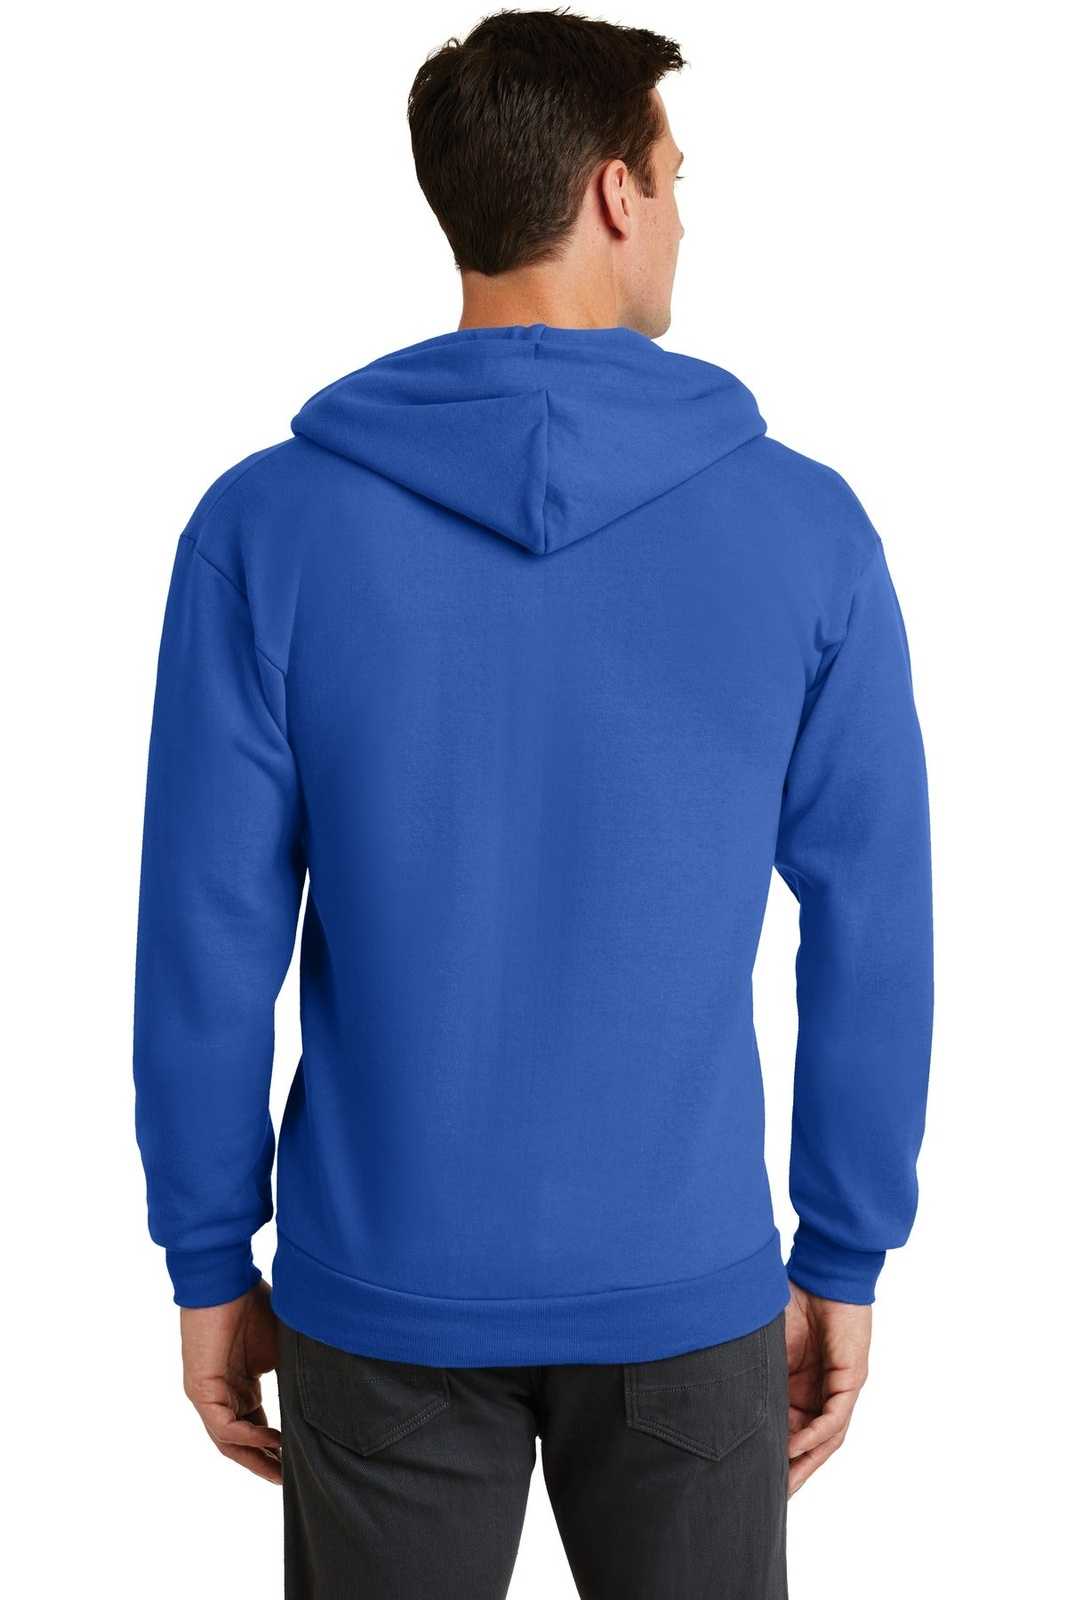 Port & Company PC78ZH Core Fleece Full-Zip Hooded Sweatshirt - Royal - HIT a Double - 1